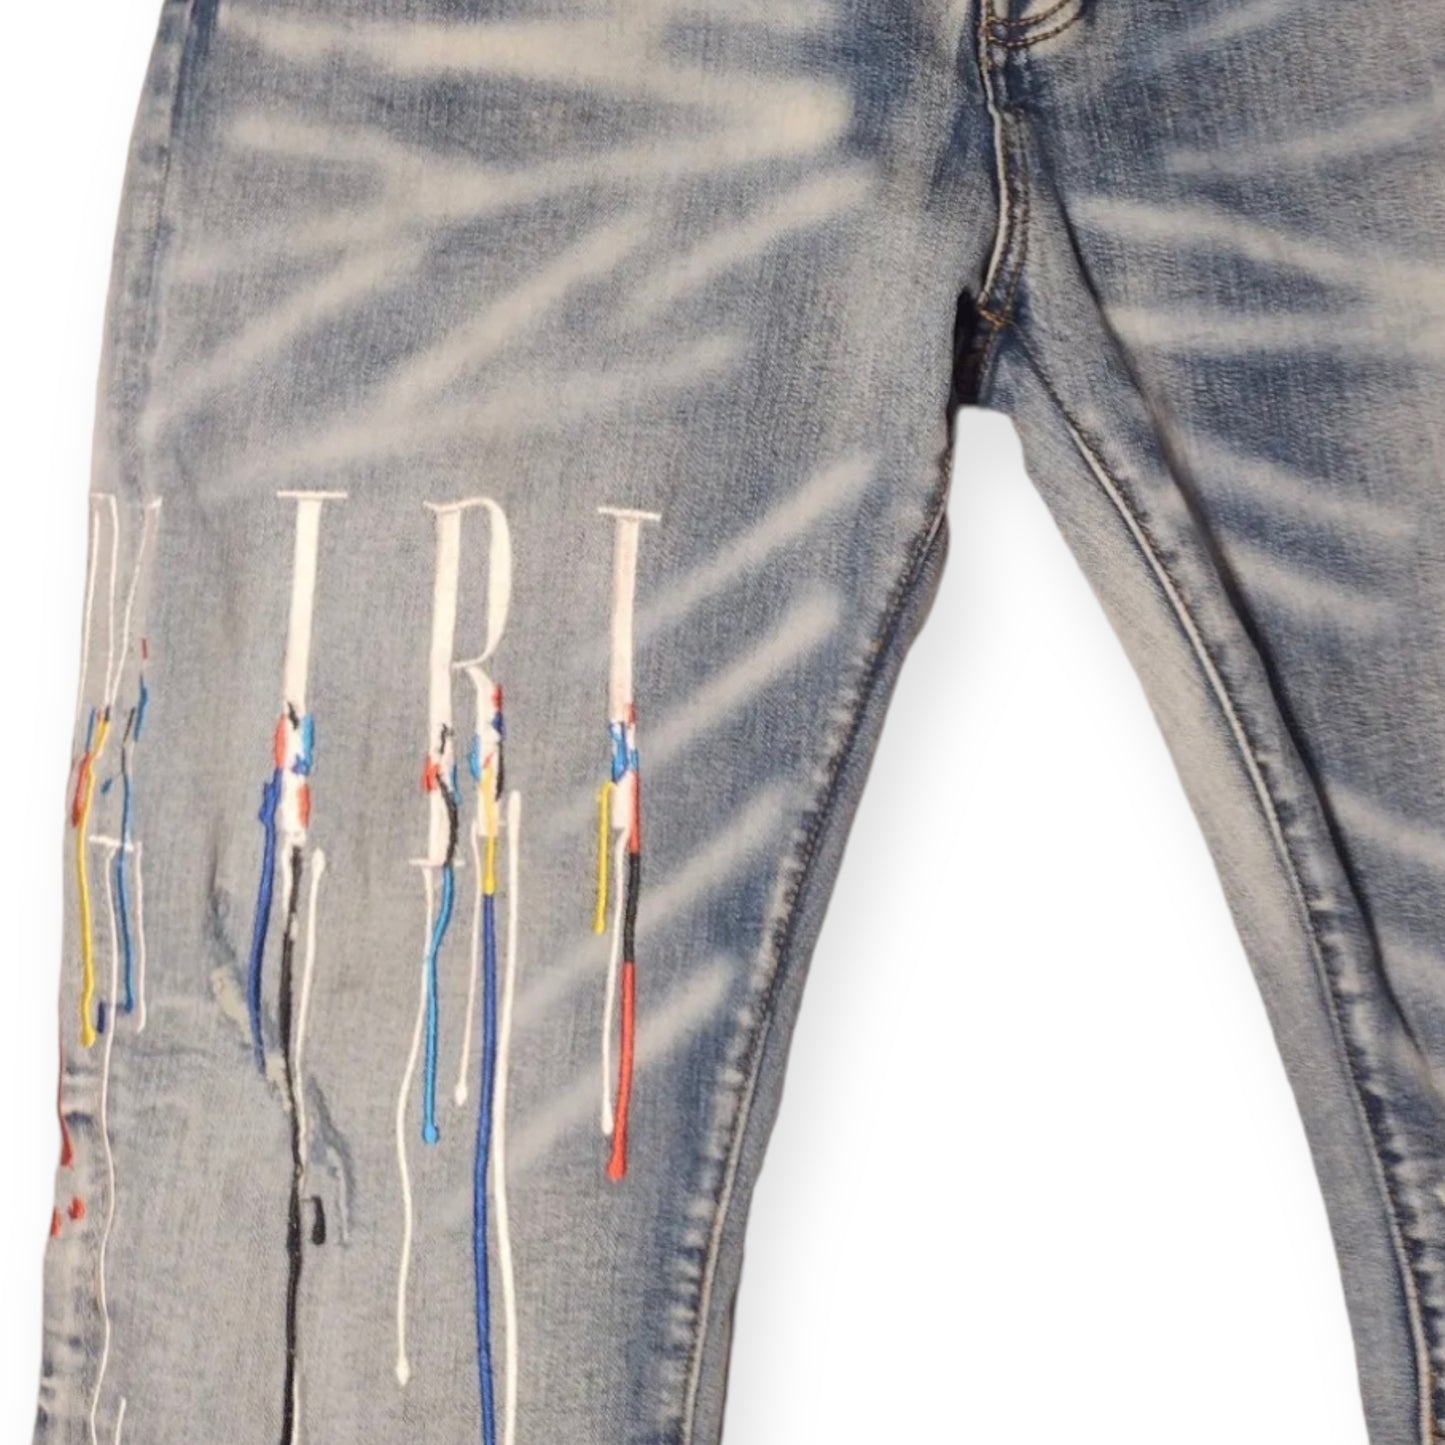 Brand New Amiri Denim Jeans size 34